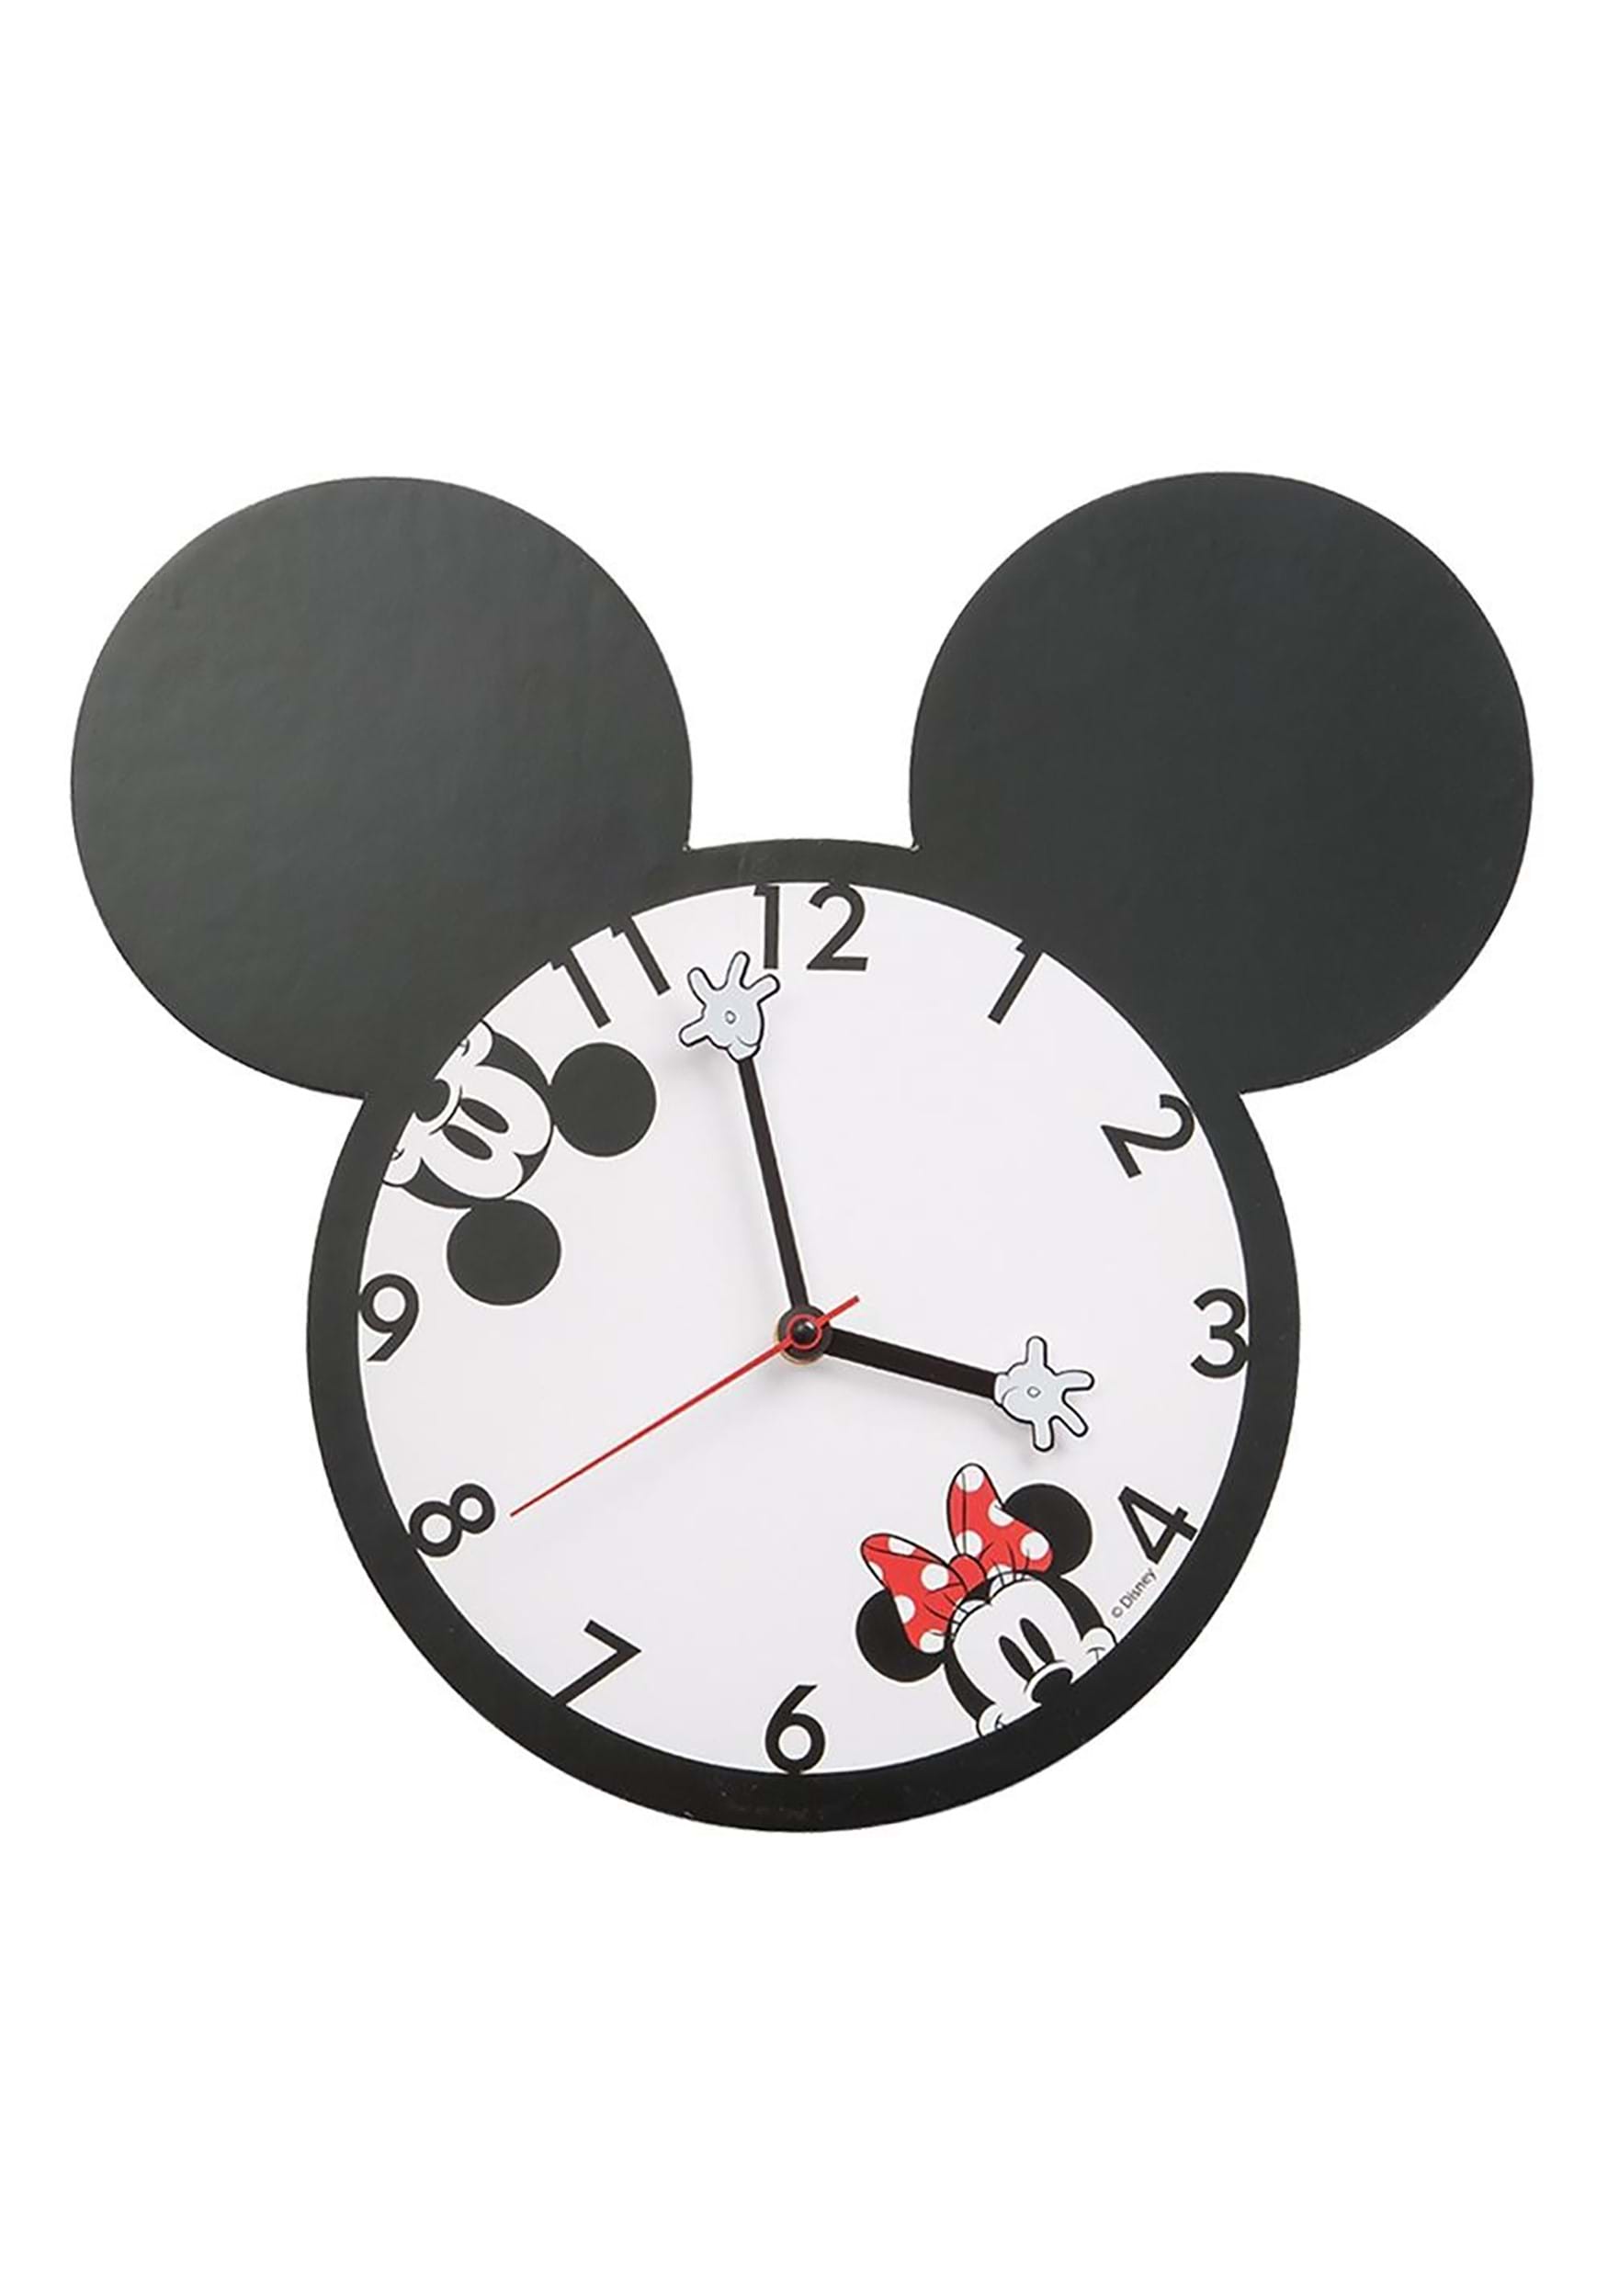 Mickey and Minnie Shaped Disney Wall Clock